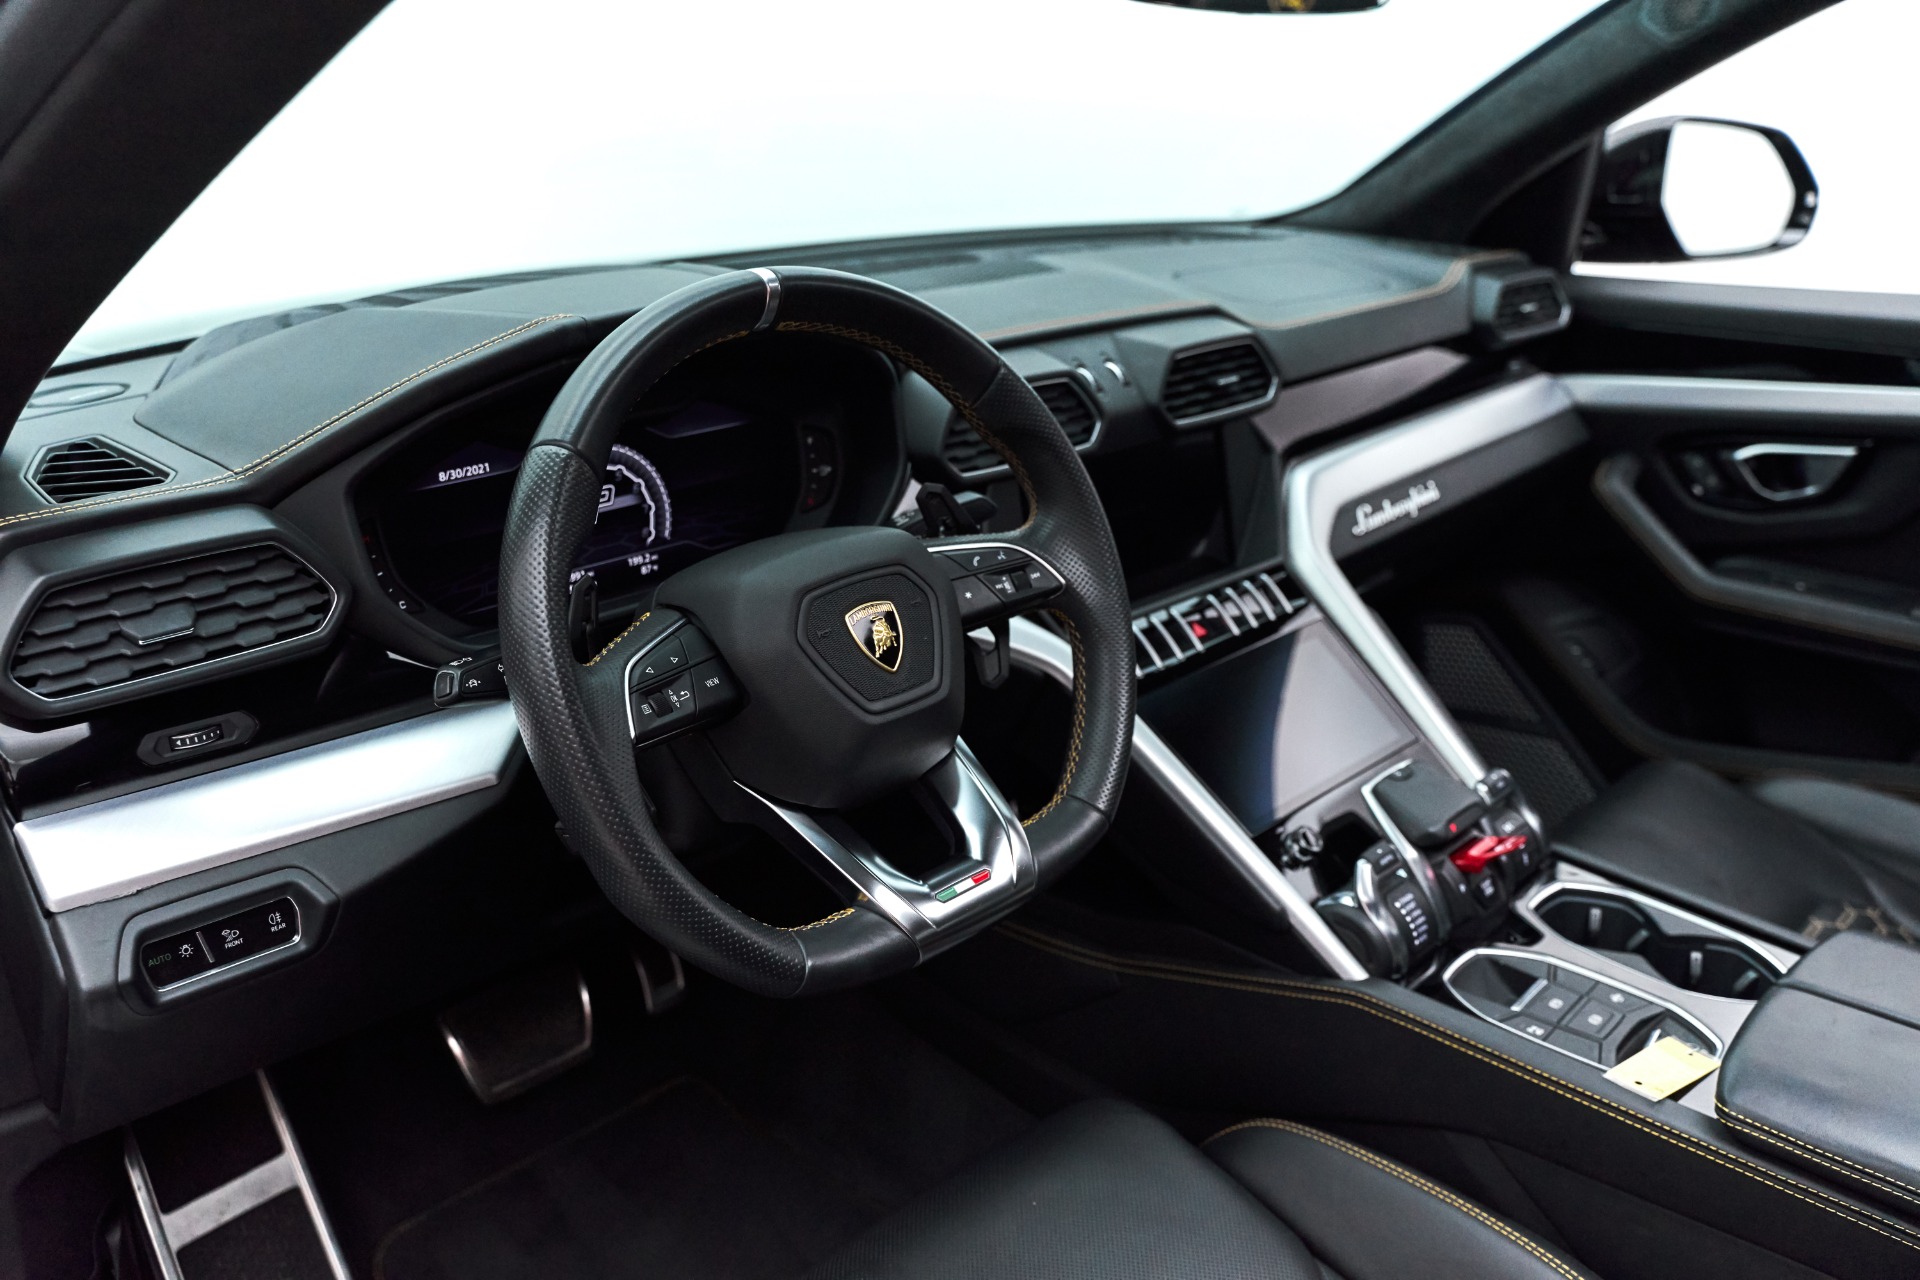 Used 2019 Lamborghini Urus Base For Sale (Sold) | Lotus Cars Las 